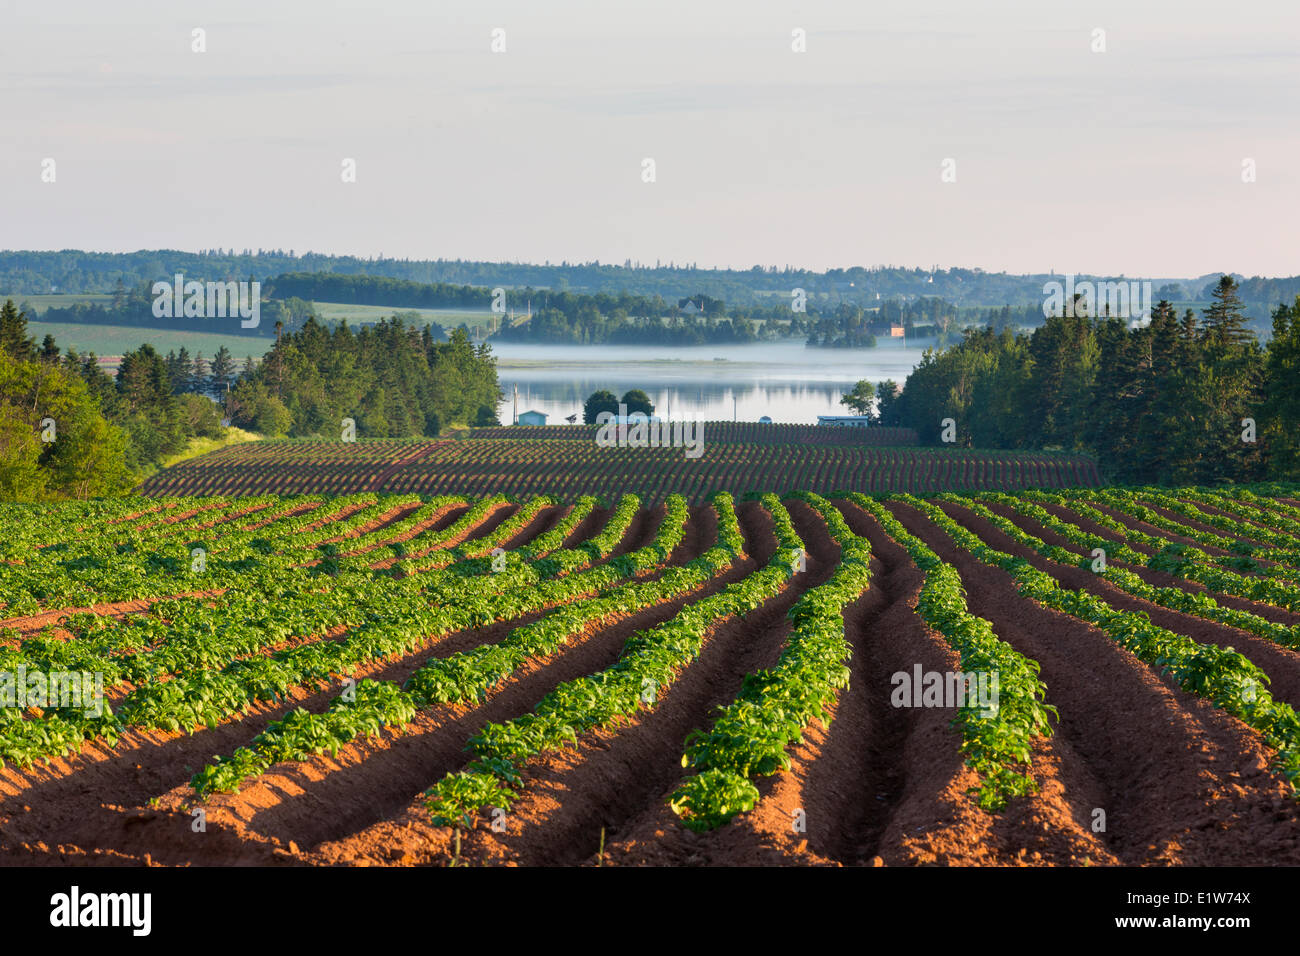 Potatoe field in spring, Fairview, Prince Edward Island, Canada Stock Photo